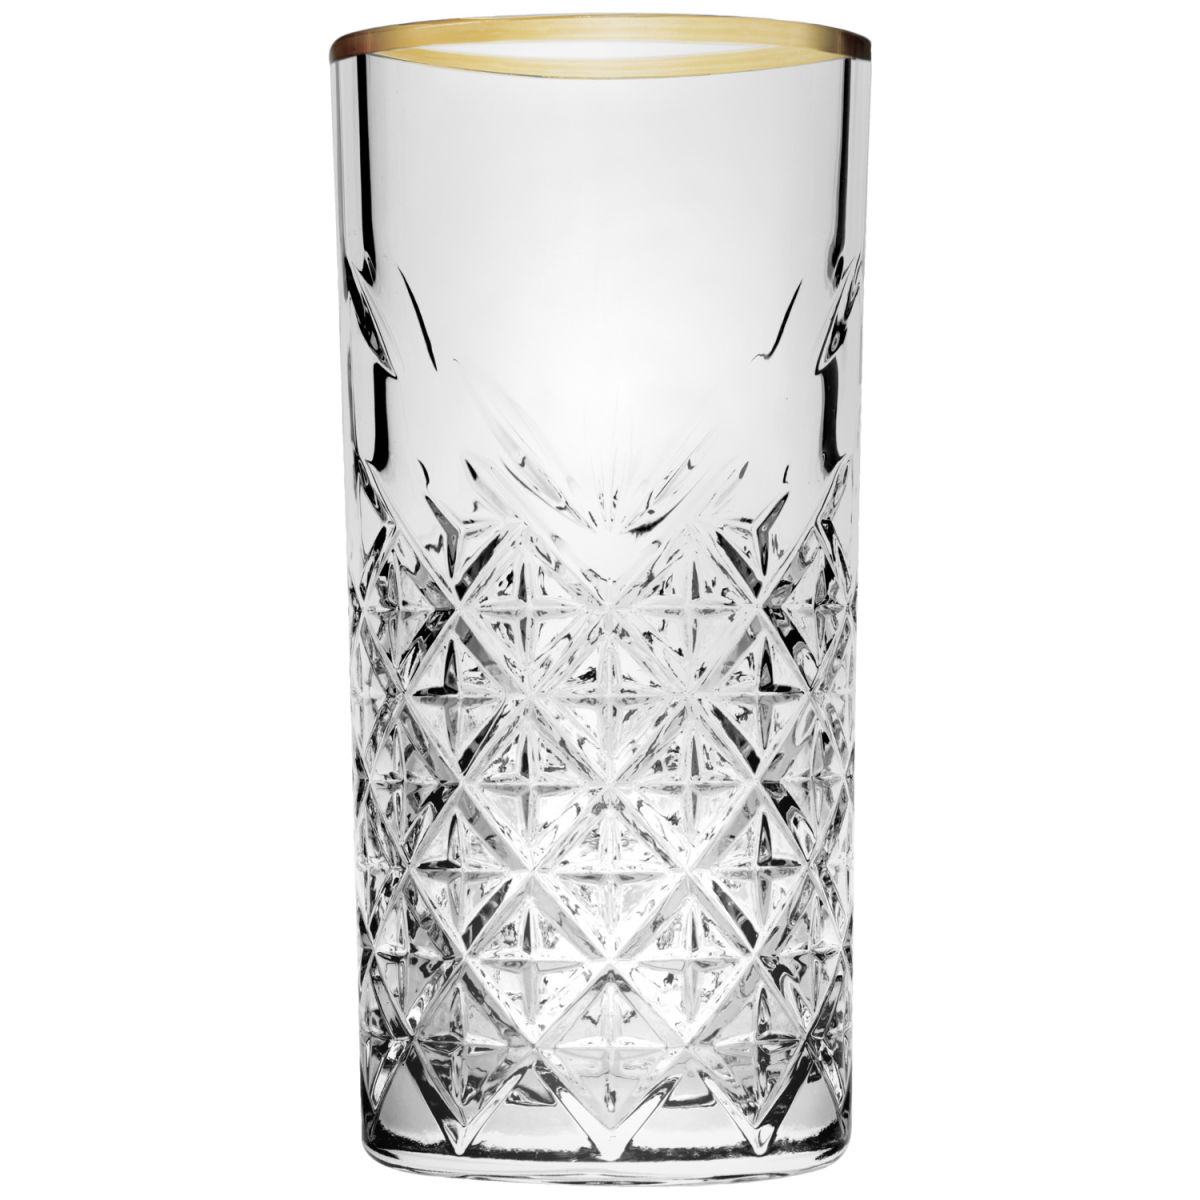 Pasabahçe Longdrinkglas Timeless; 450ml, 7.8x16.1 cm (ØxH); transparant/goud; 4 stuk / verpakking